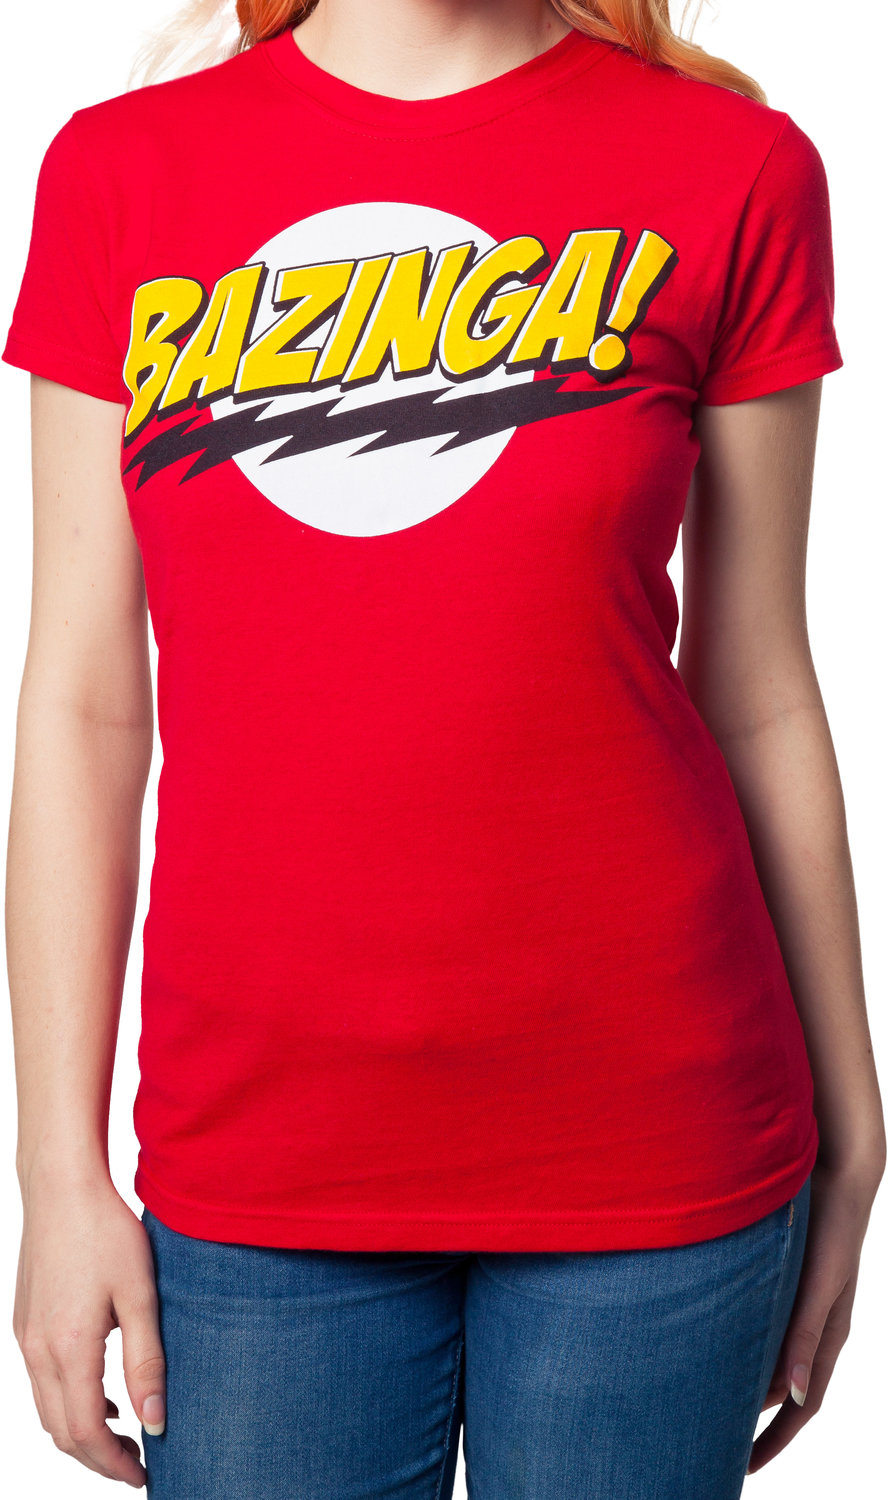 bazinga shirt target